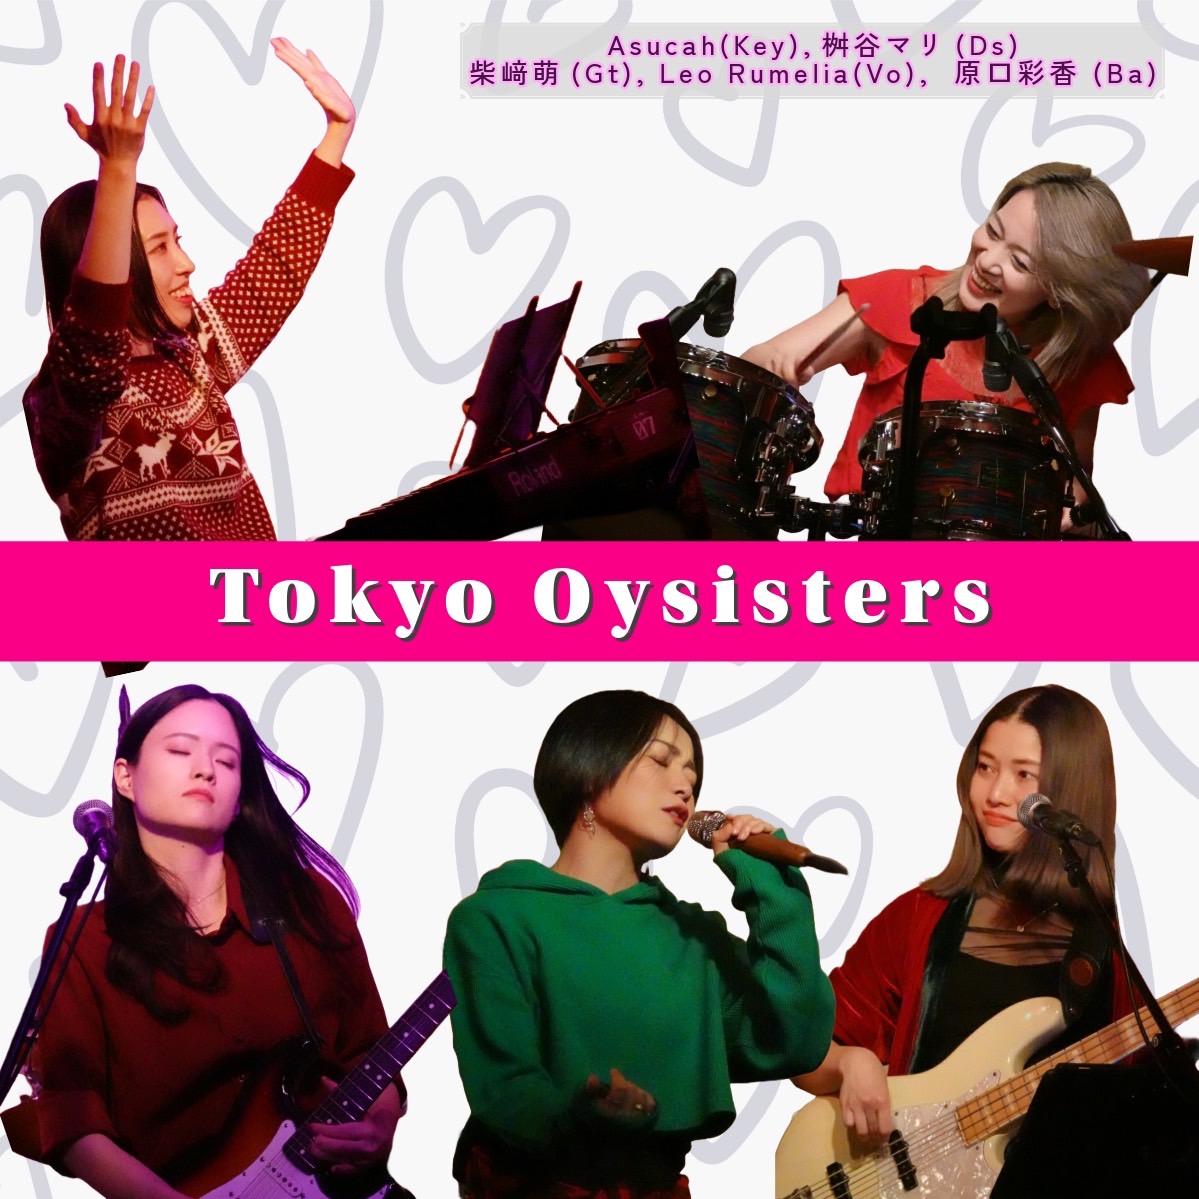 Tokyo Oysisters